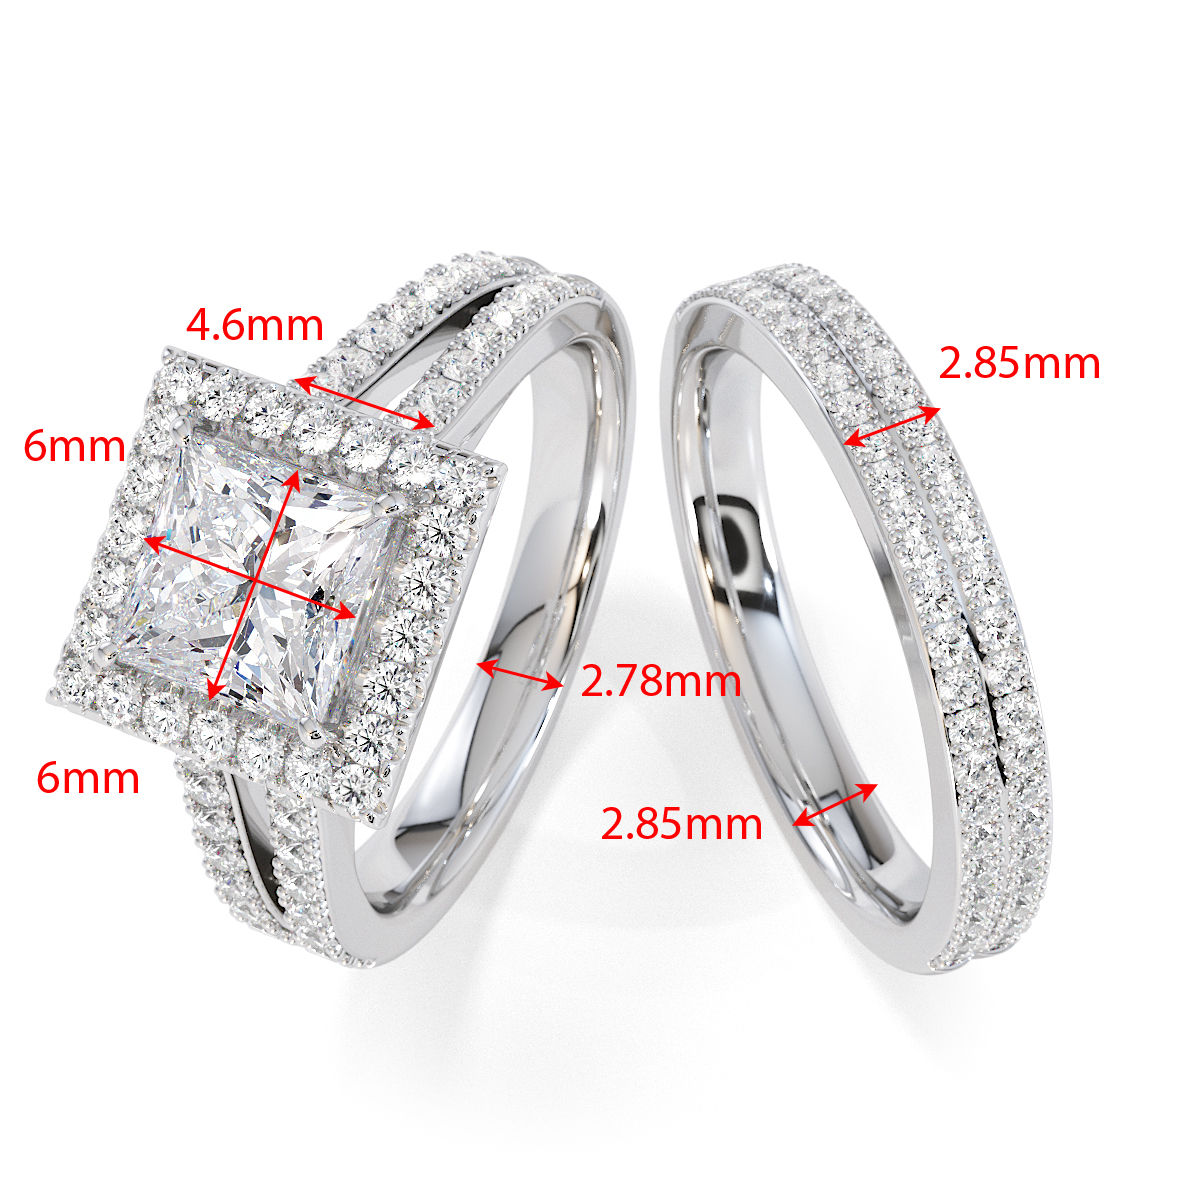 Gold / Platinum Ruby and Diamond Engagement Ring RZ3462